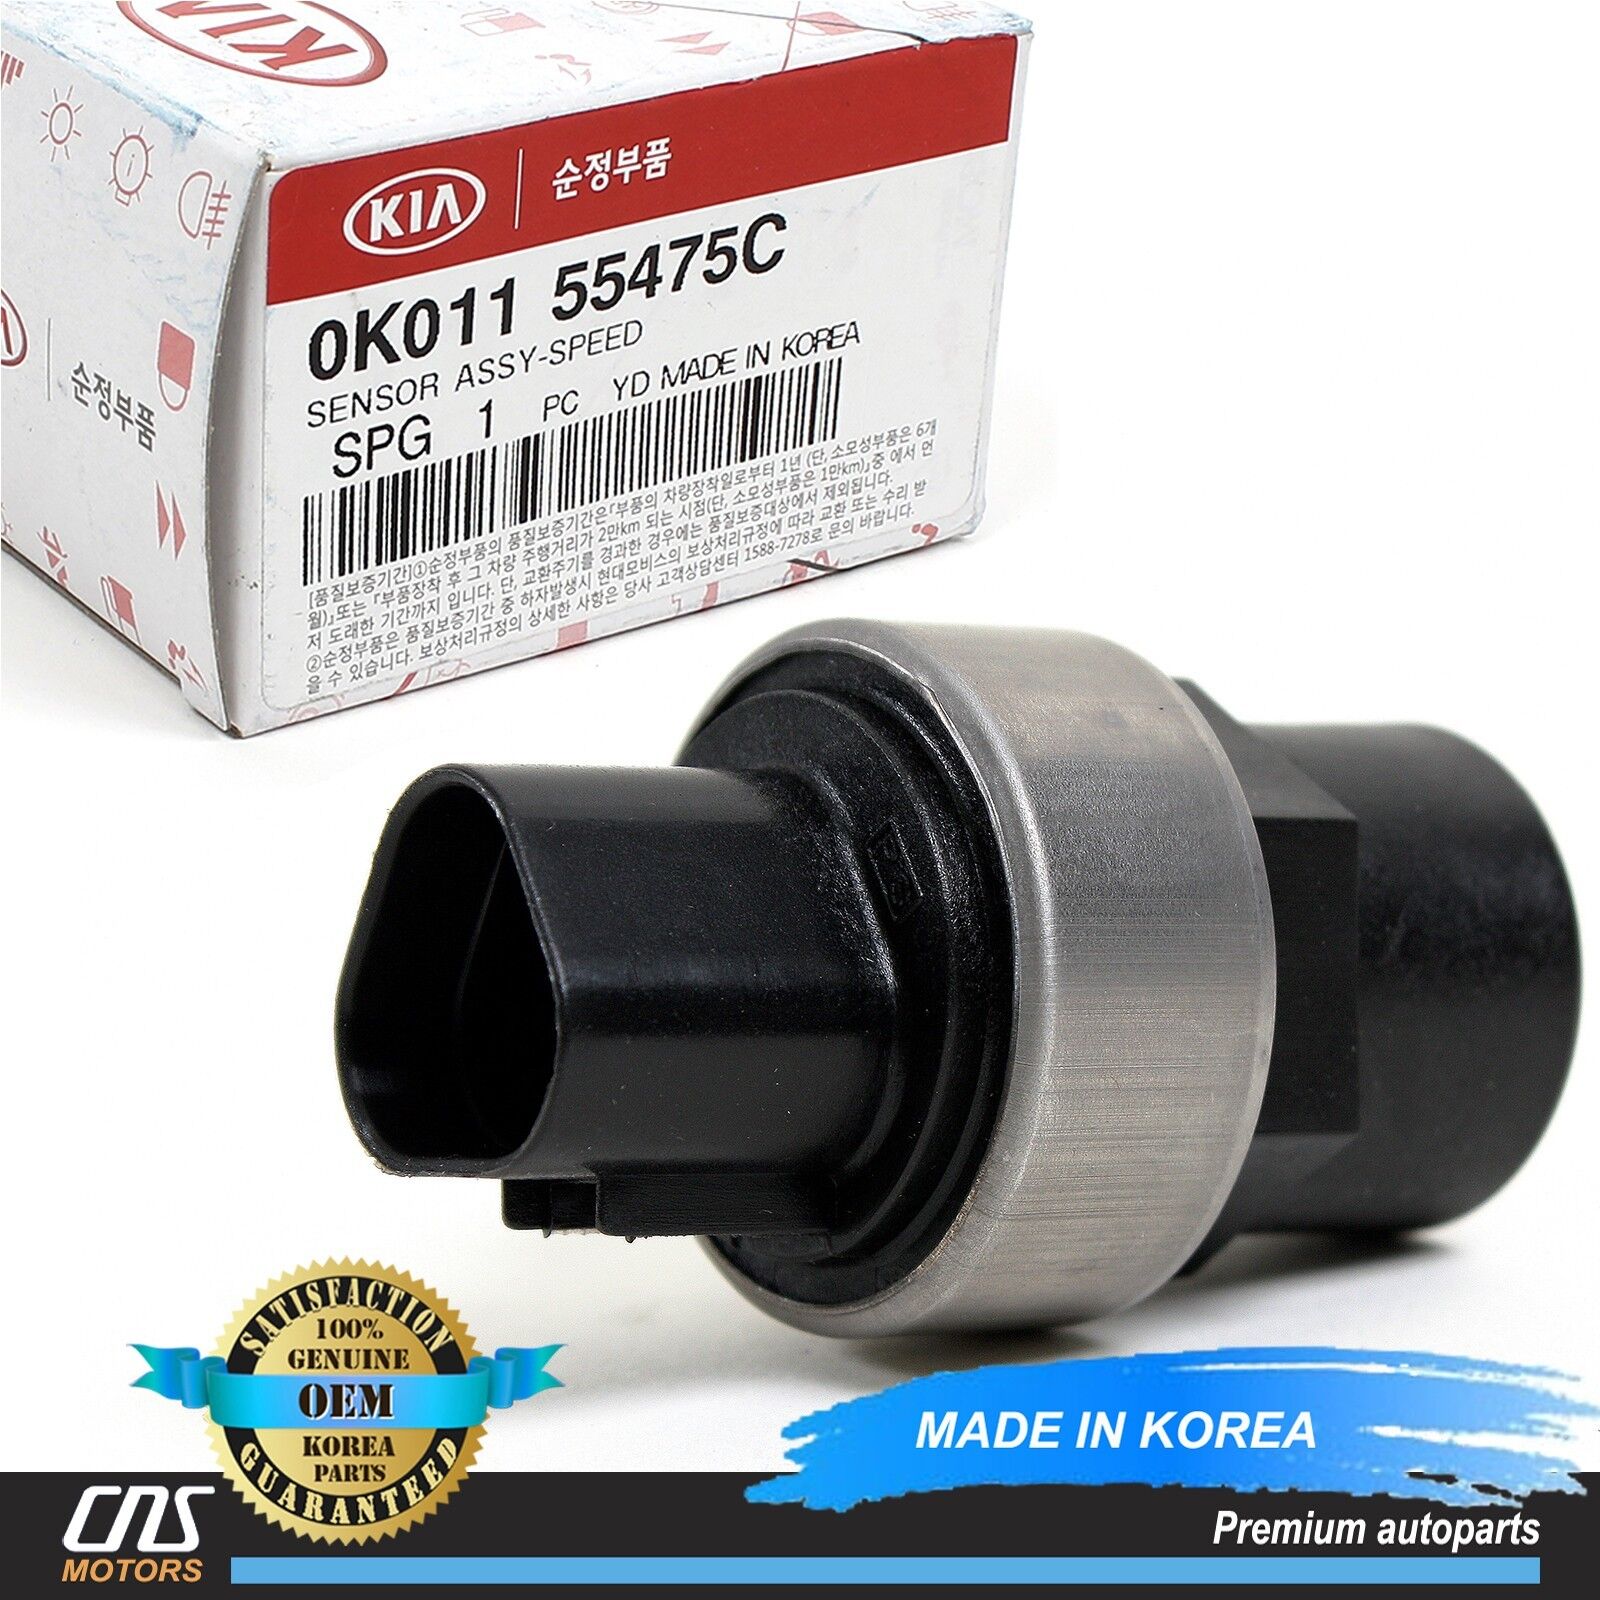 ⭐GENUINE Transmission Speed Sensor for 94-02 Kia Sephia Sportage OEM 0K01155475C